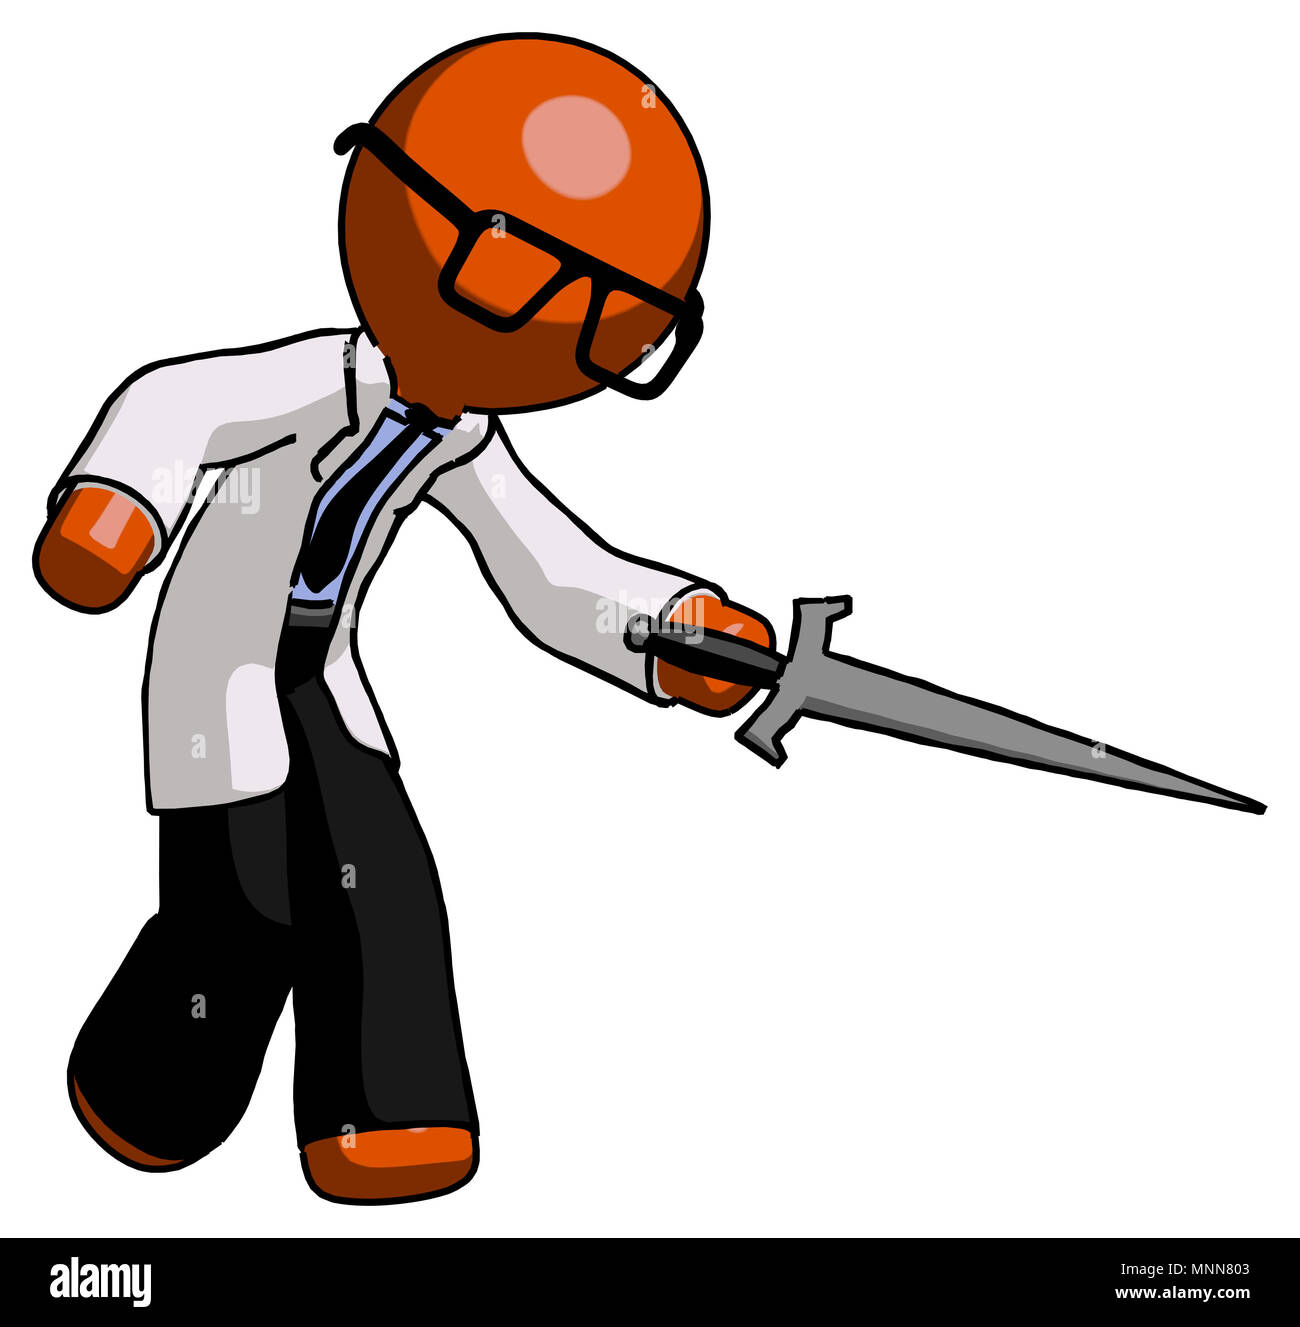 Orange doctor scientist man sword pose stabbing or jabbing. Stock Photo